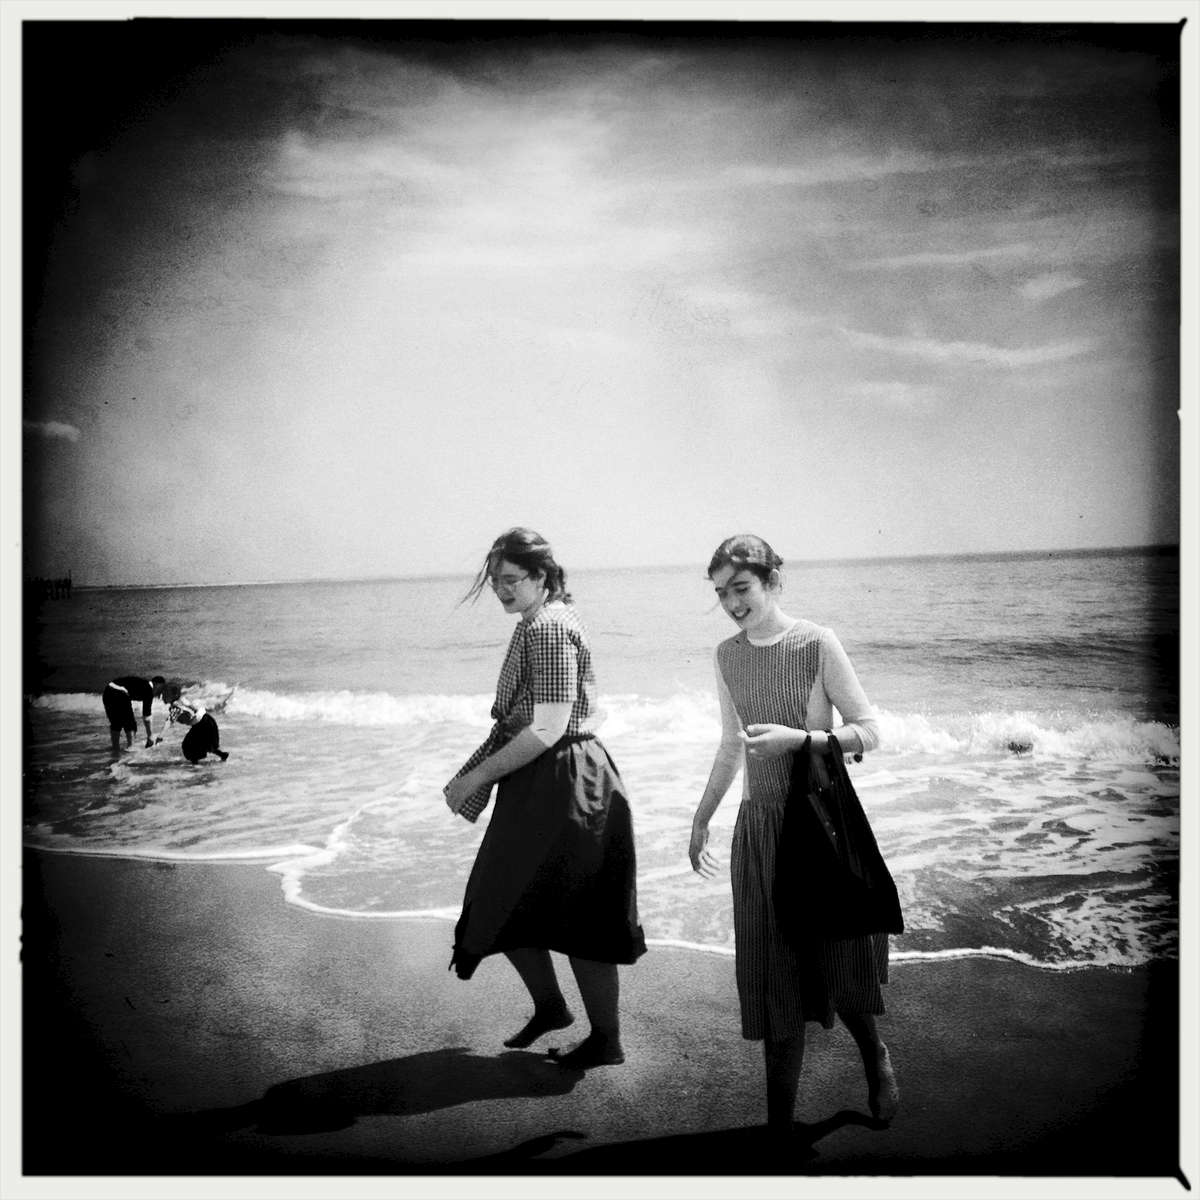 Young orthodox Jewish women on an unusually warm spring day -- Coney Island, Apr. 2017.